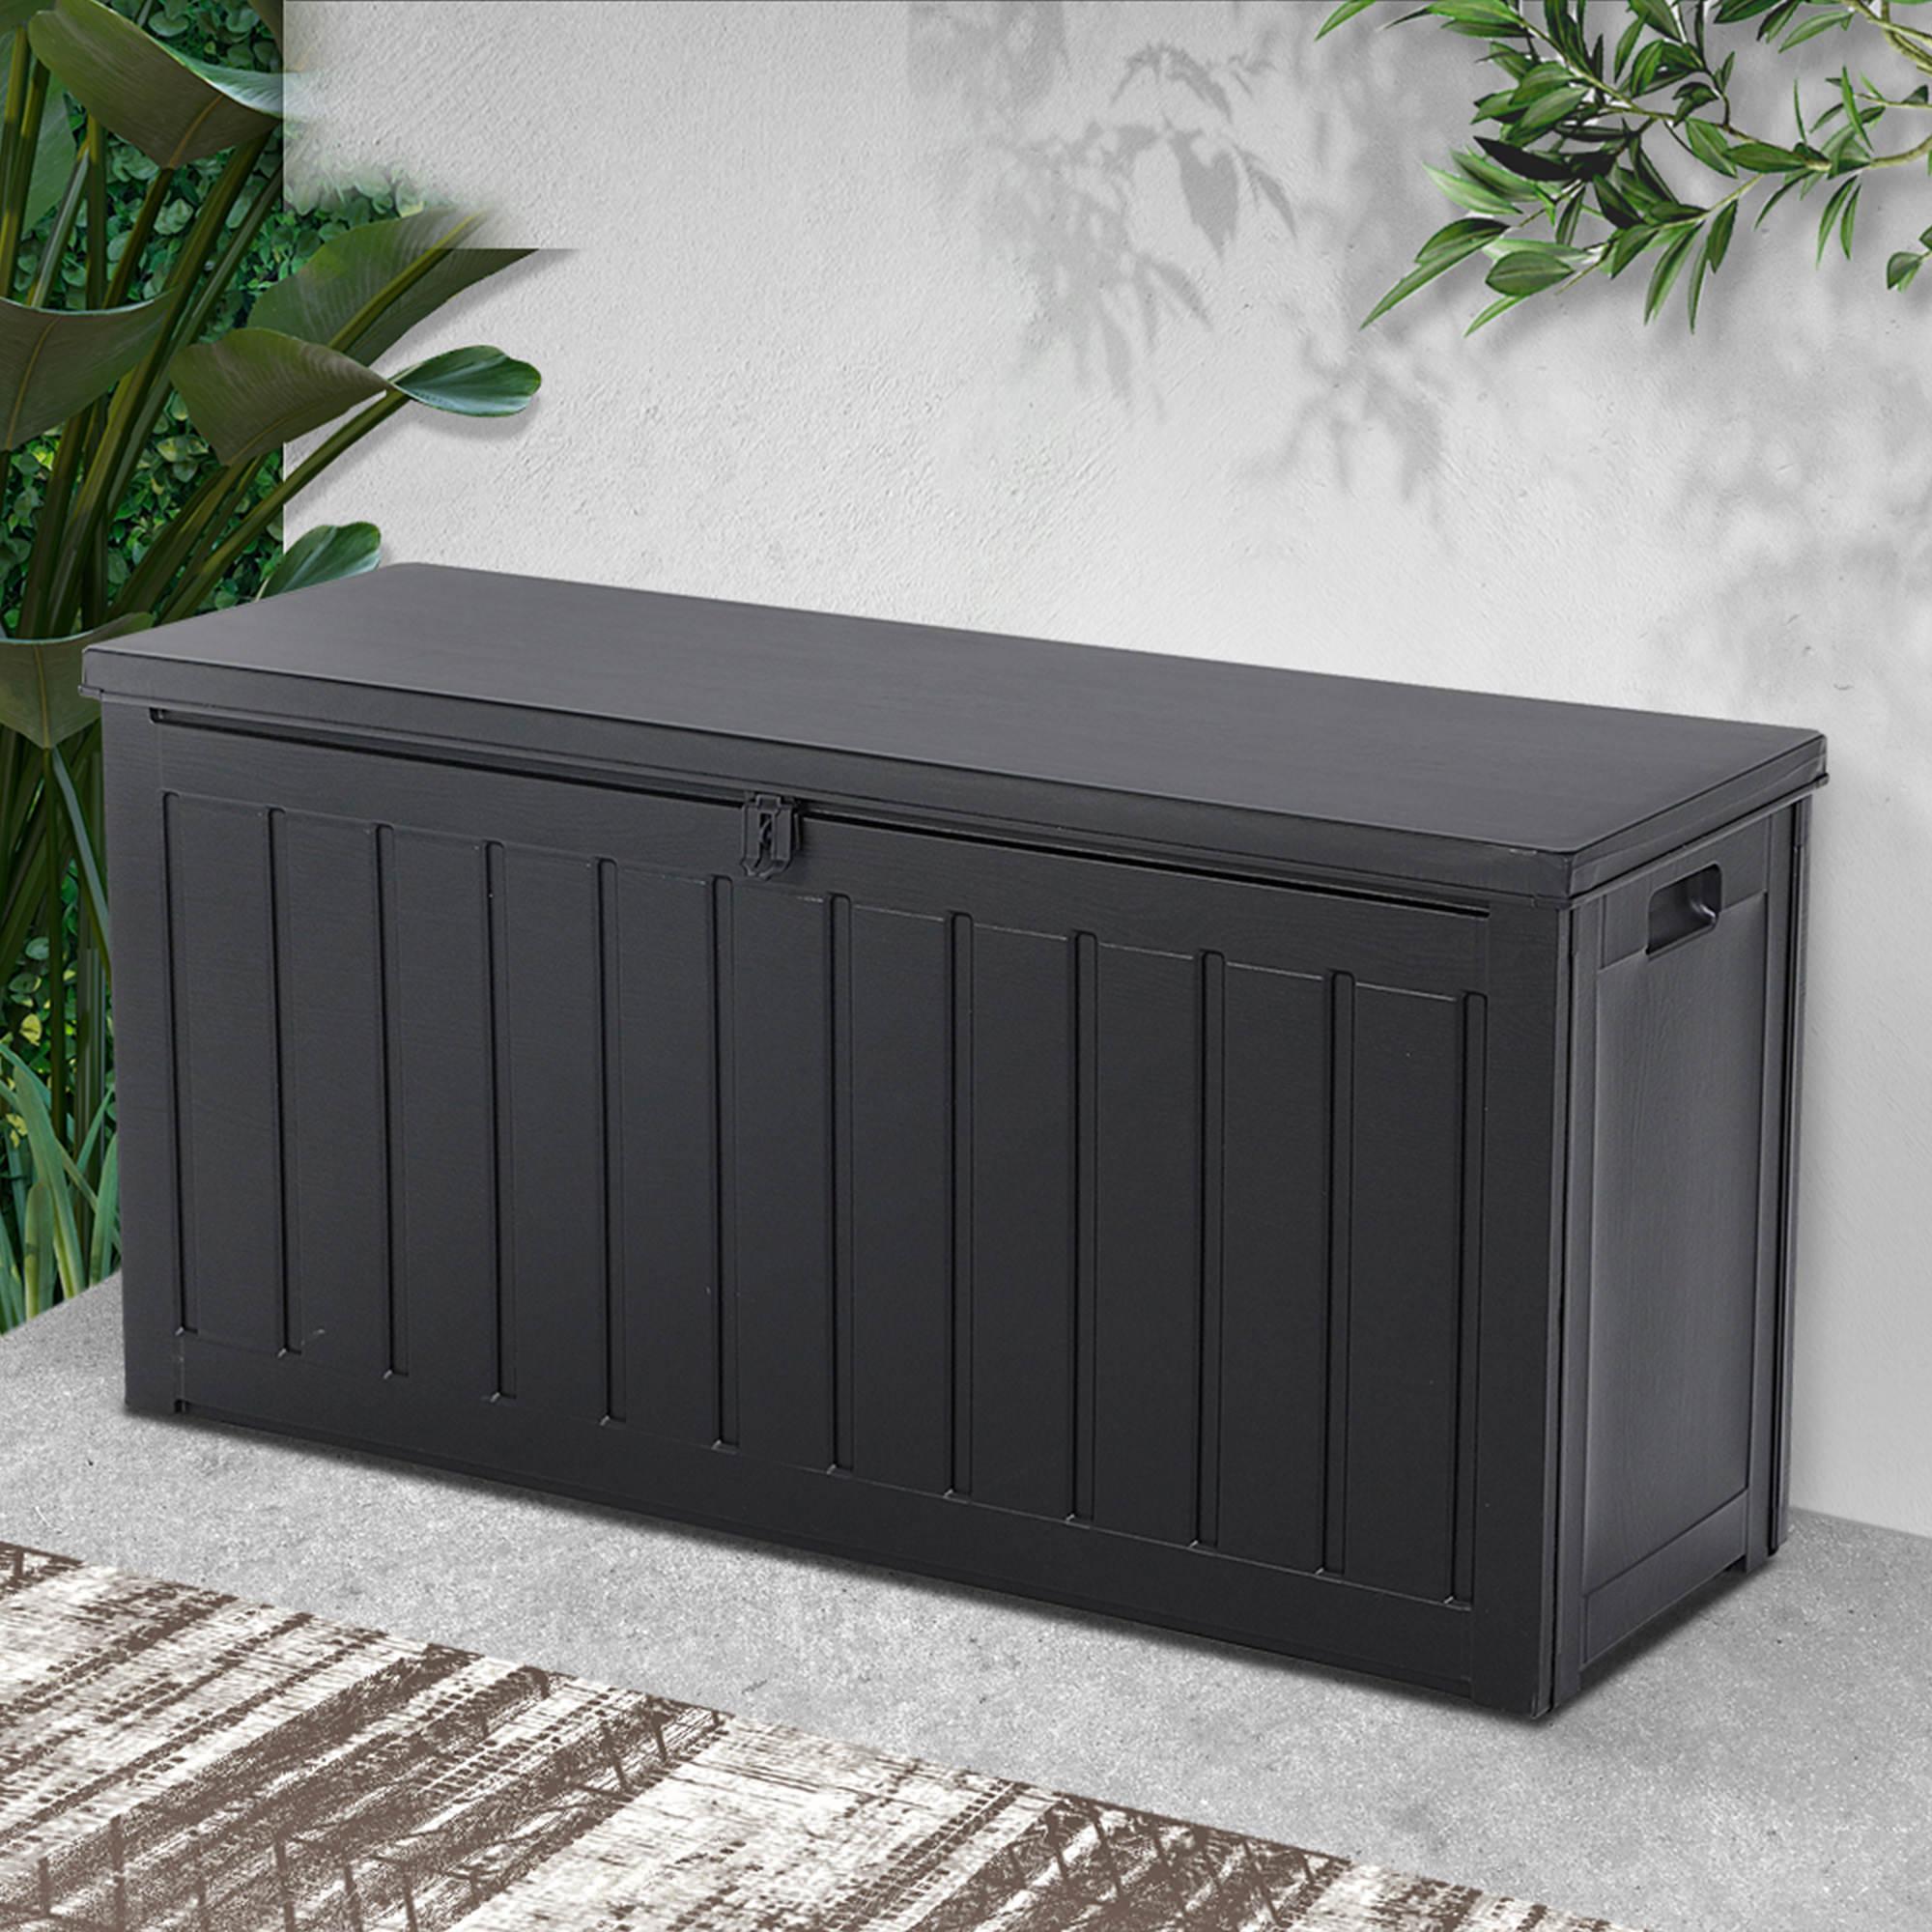 Gardeon Outdoor Storage Box 240L Black Image 2